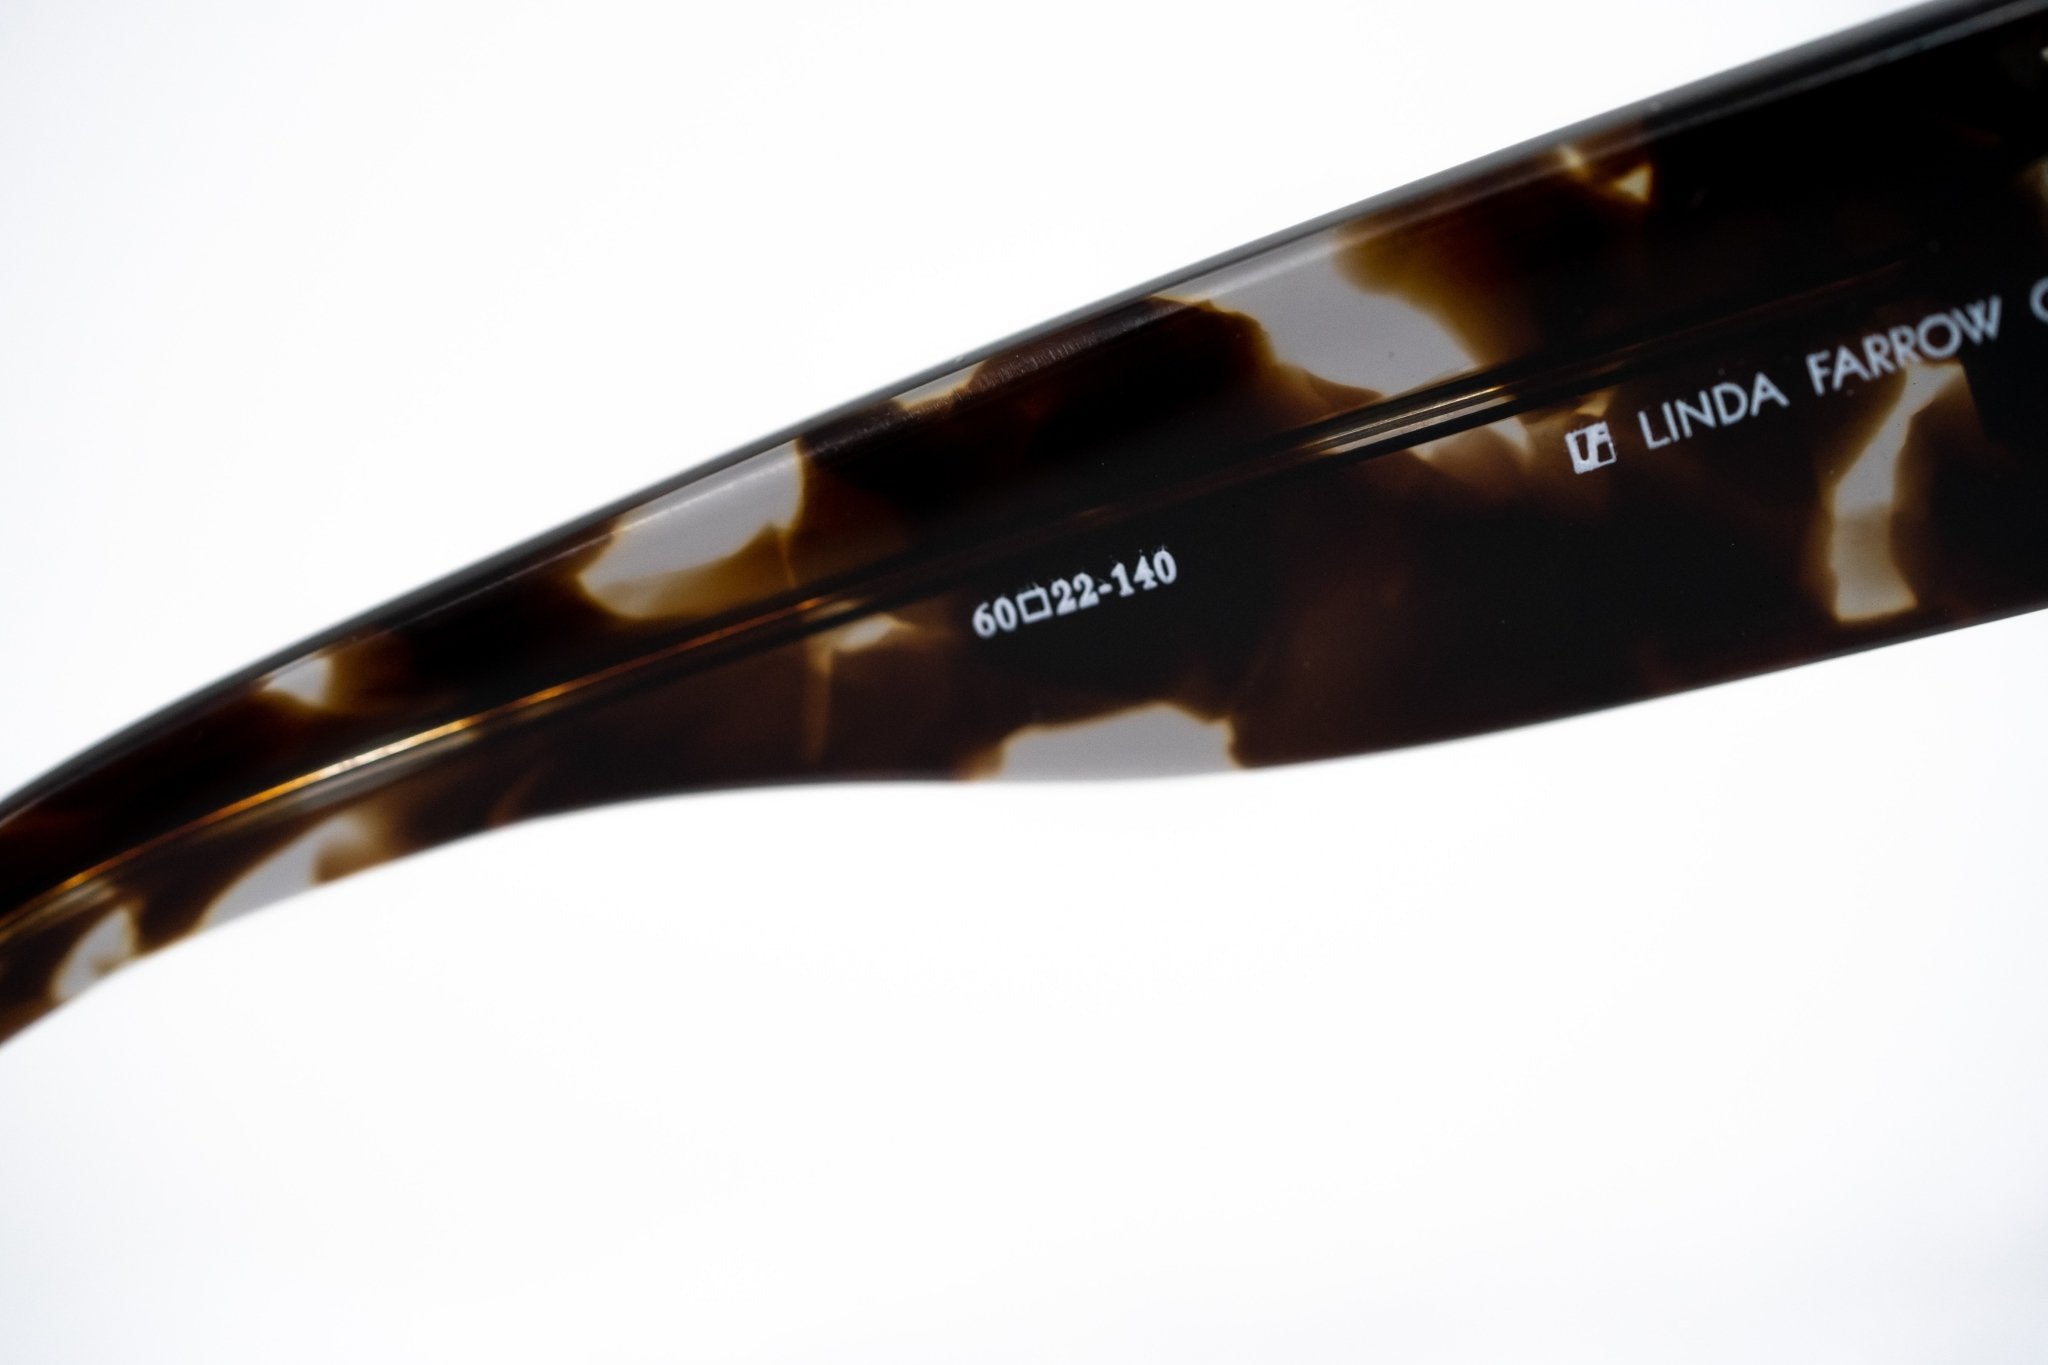 Kokon To Zai Sunglasses D-Frame Unisex Matte Black Tortoiseshell With CAT5 Grey Gradient Lenses Lenses KTZ10C5SUN - Watches & Crystals